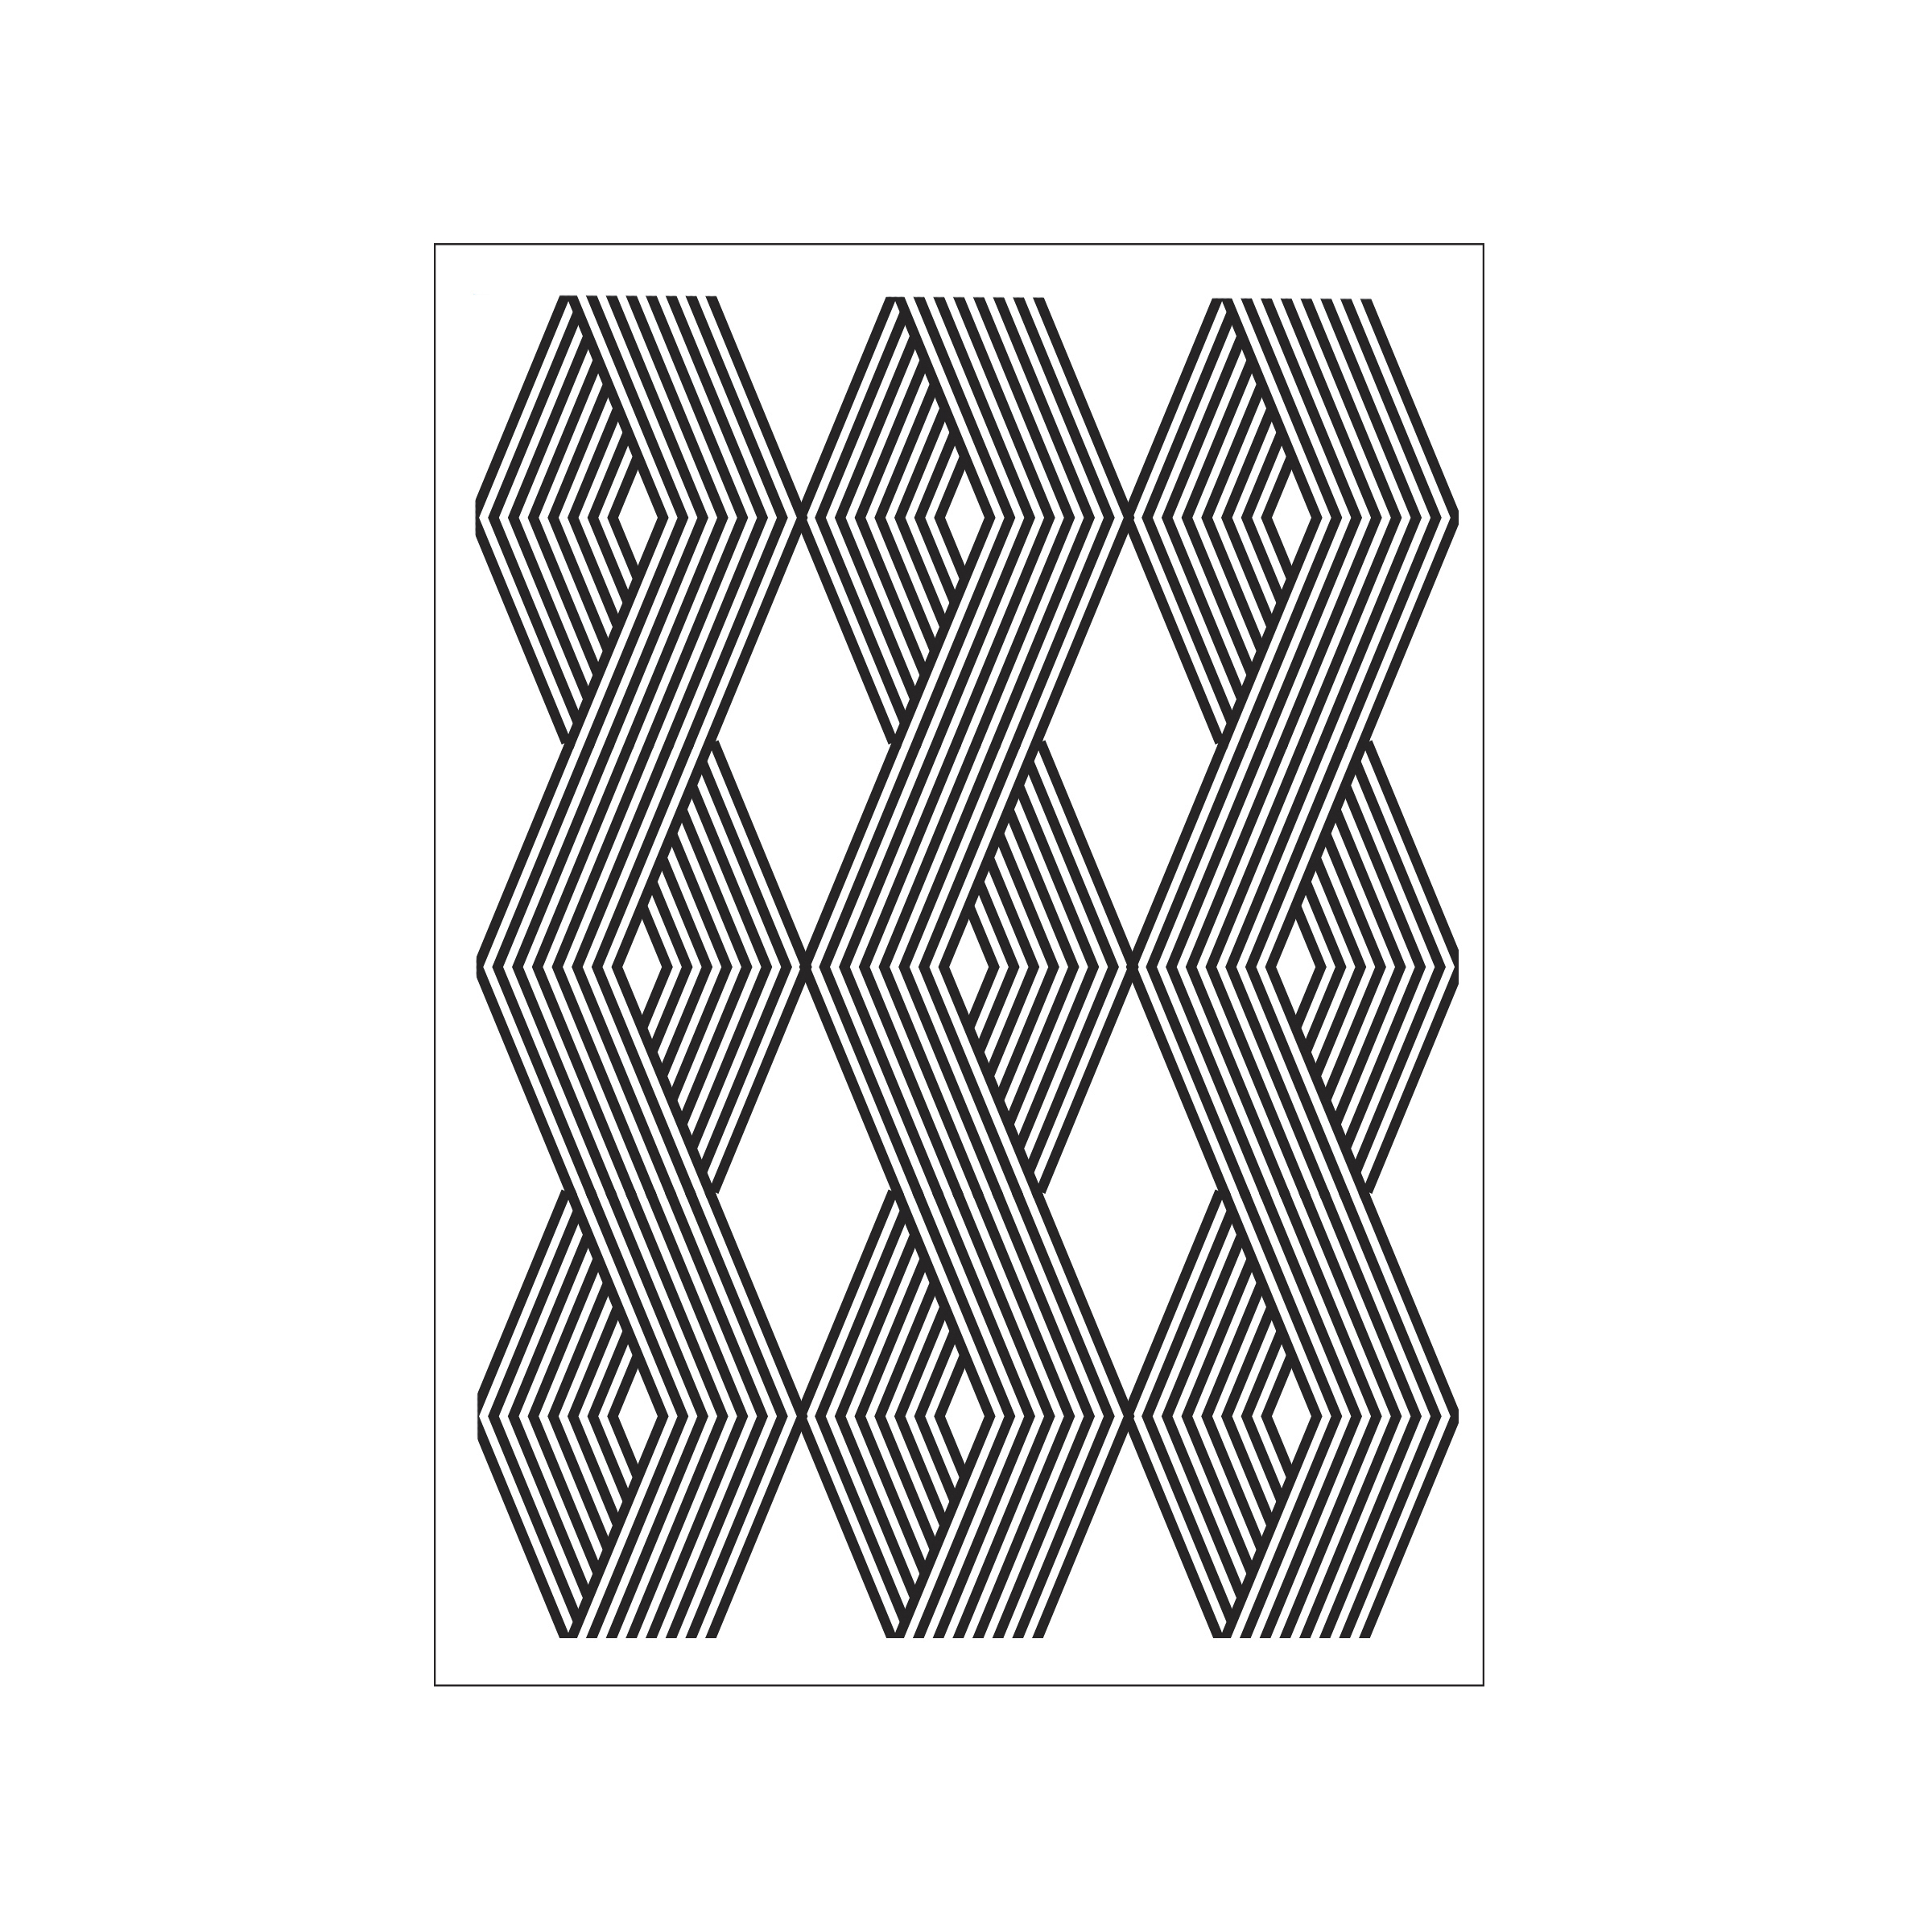 Darice • Classeur de Gaufrage motif d'impression de câble vertical